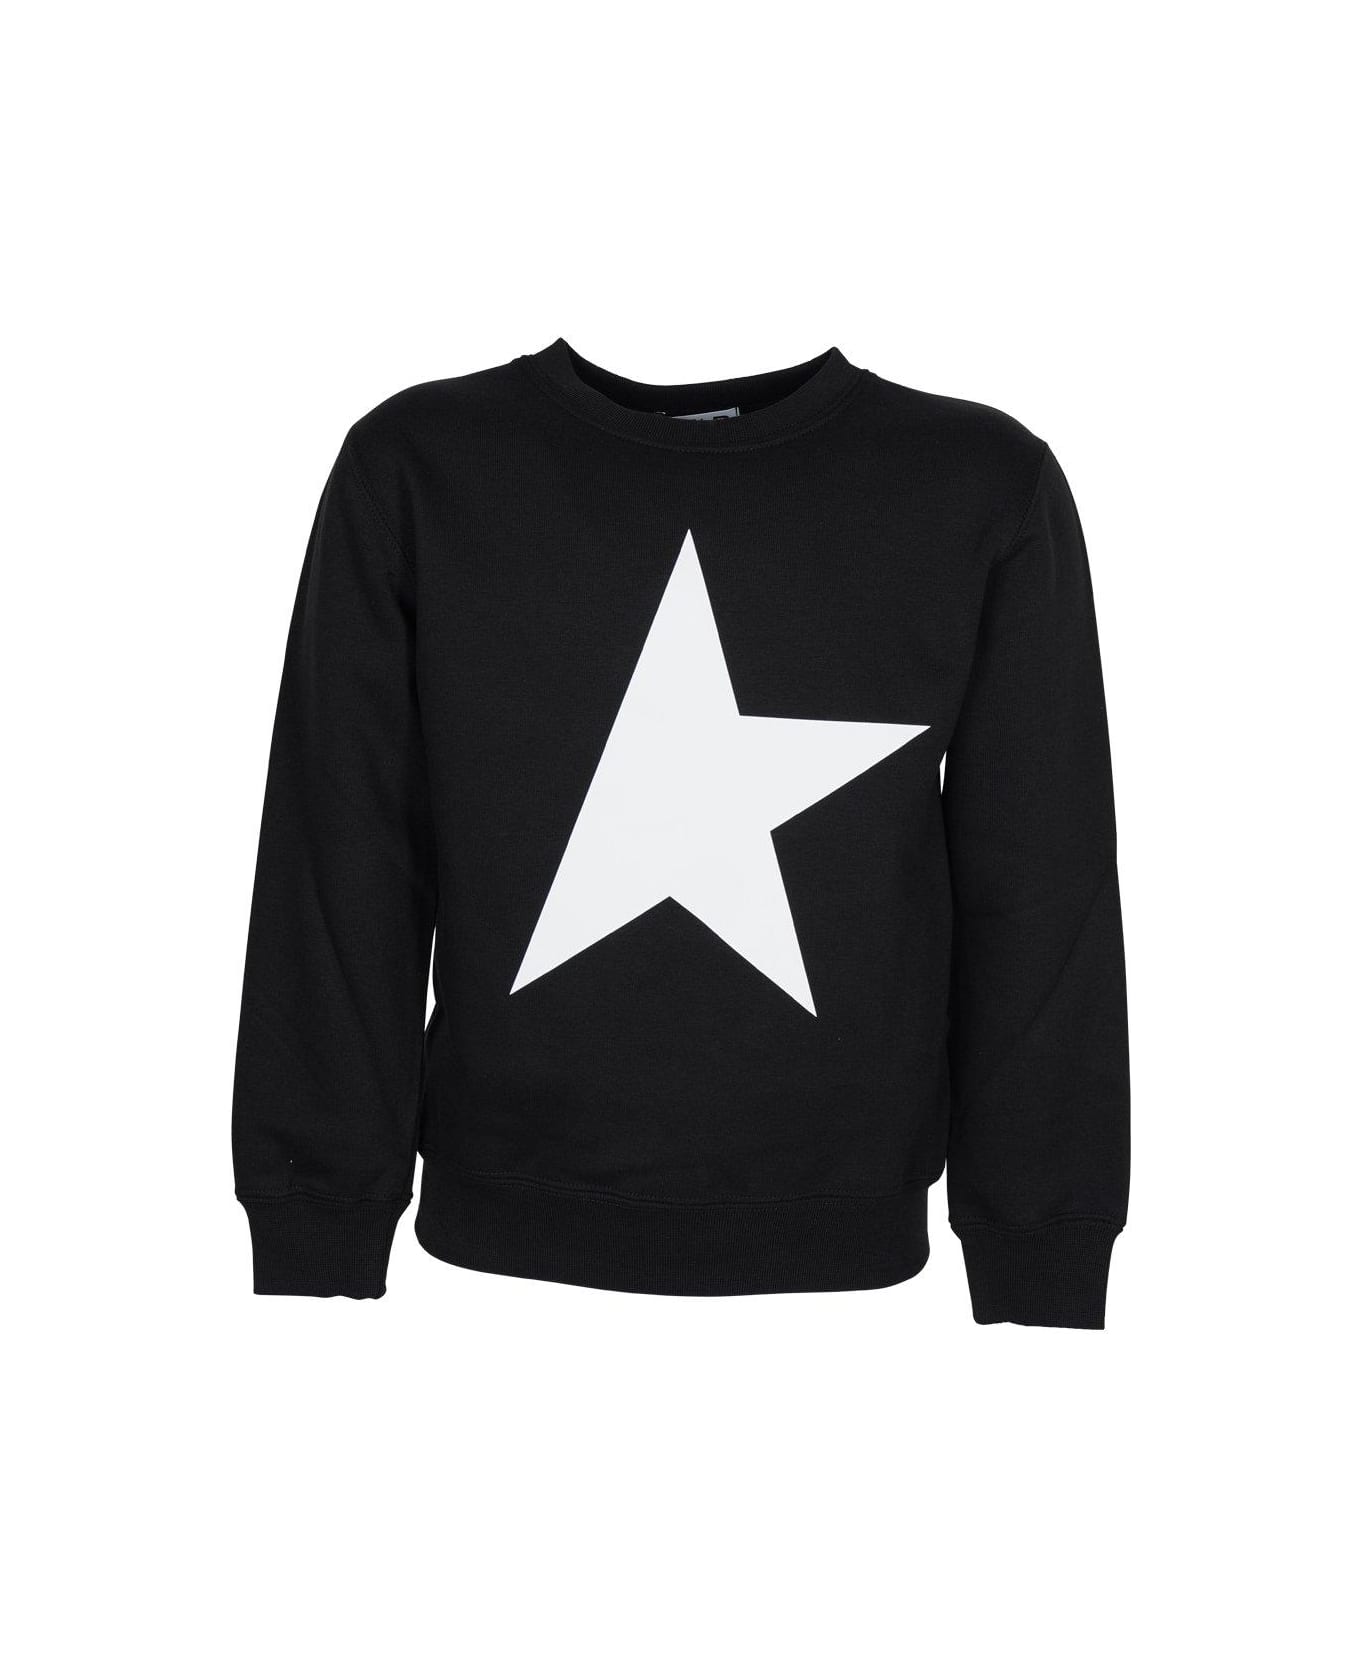 Golden Goose Black Star Collection Long-sleeved Sweatshirt - Black/white